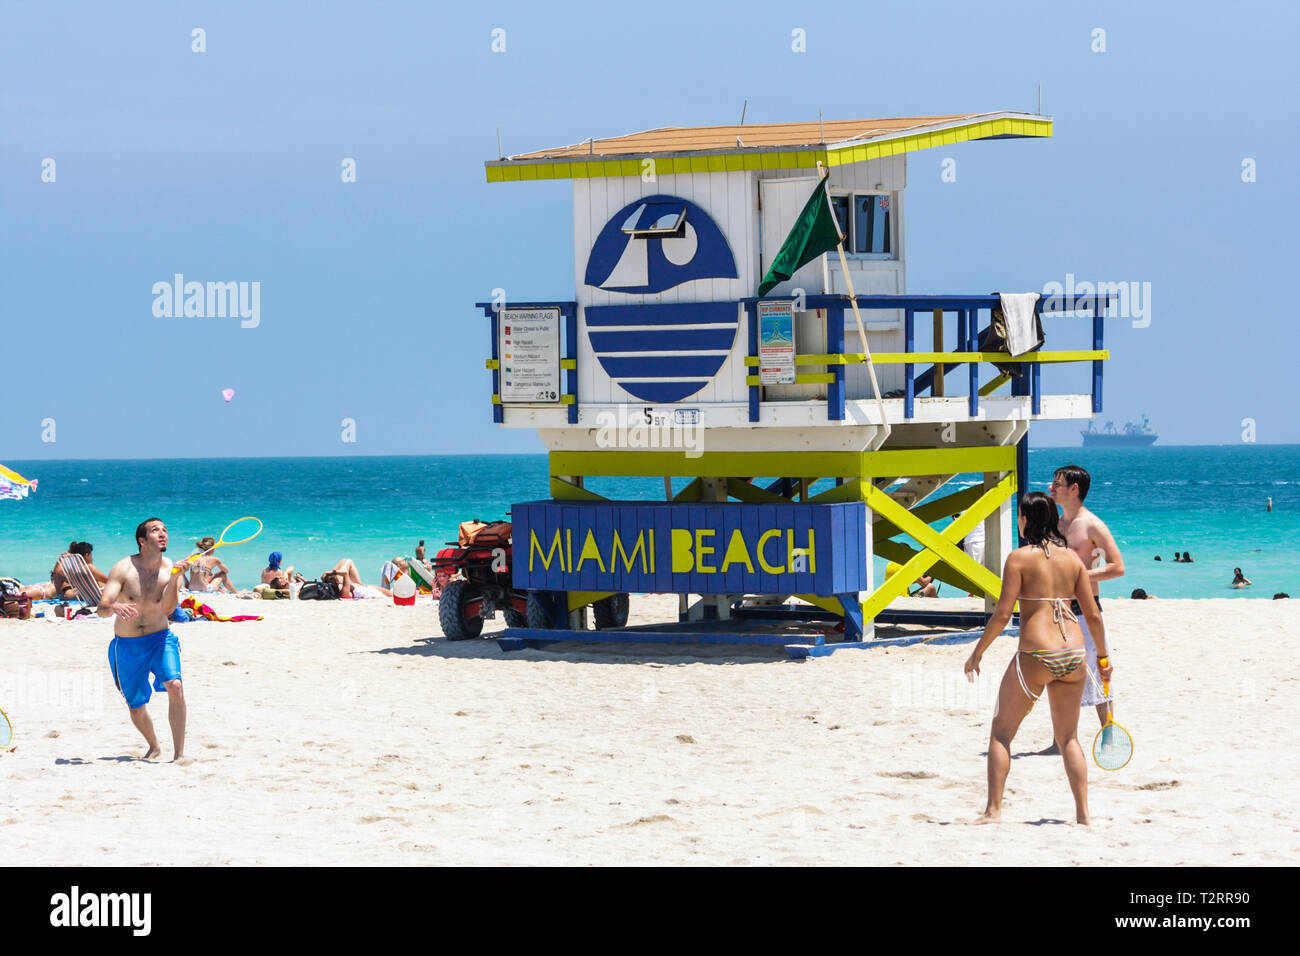 Miami Beach Florida,Atlantic Ocean water lifeguard stand,tower,public,safety,sand,seashore,adult adults man men male,woman women female lady,playing,b Stock Photo